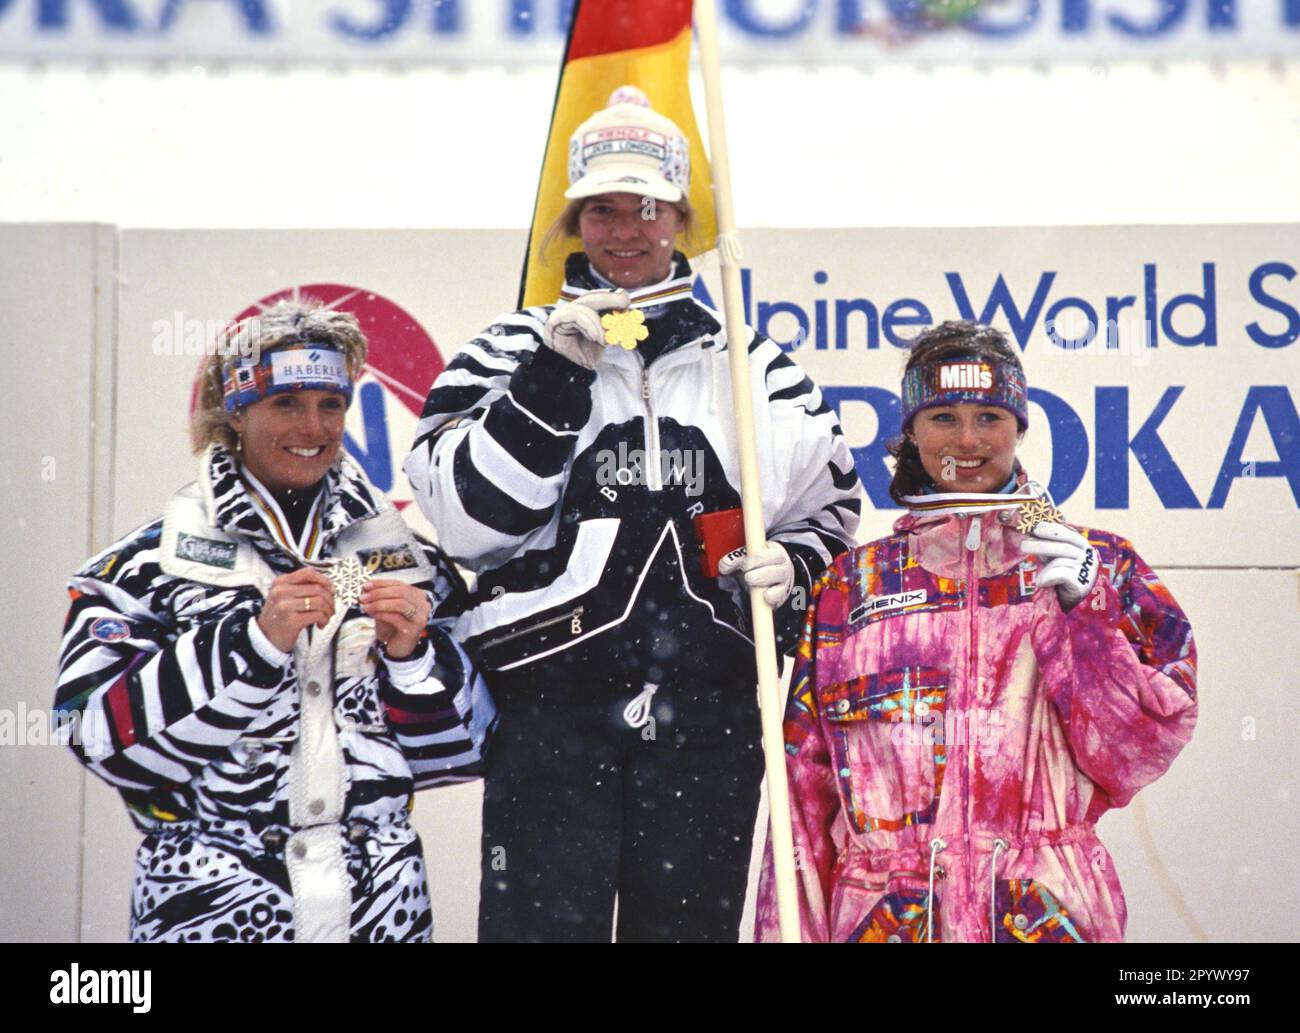 SKI ALPIN SEASON 92/93 WM 1993 Morioka Shizukuishi Super G Women 14.02.1993 Sylvia EDER (AUT left), Katja SEIZINGER (GER) and Astrid LOEDEMEL (NOR right) celebrate on the podium.  xxNOxMODELxRELEASExx [automated translation]- AUSTRIA OUT Stock Photo